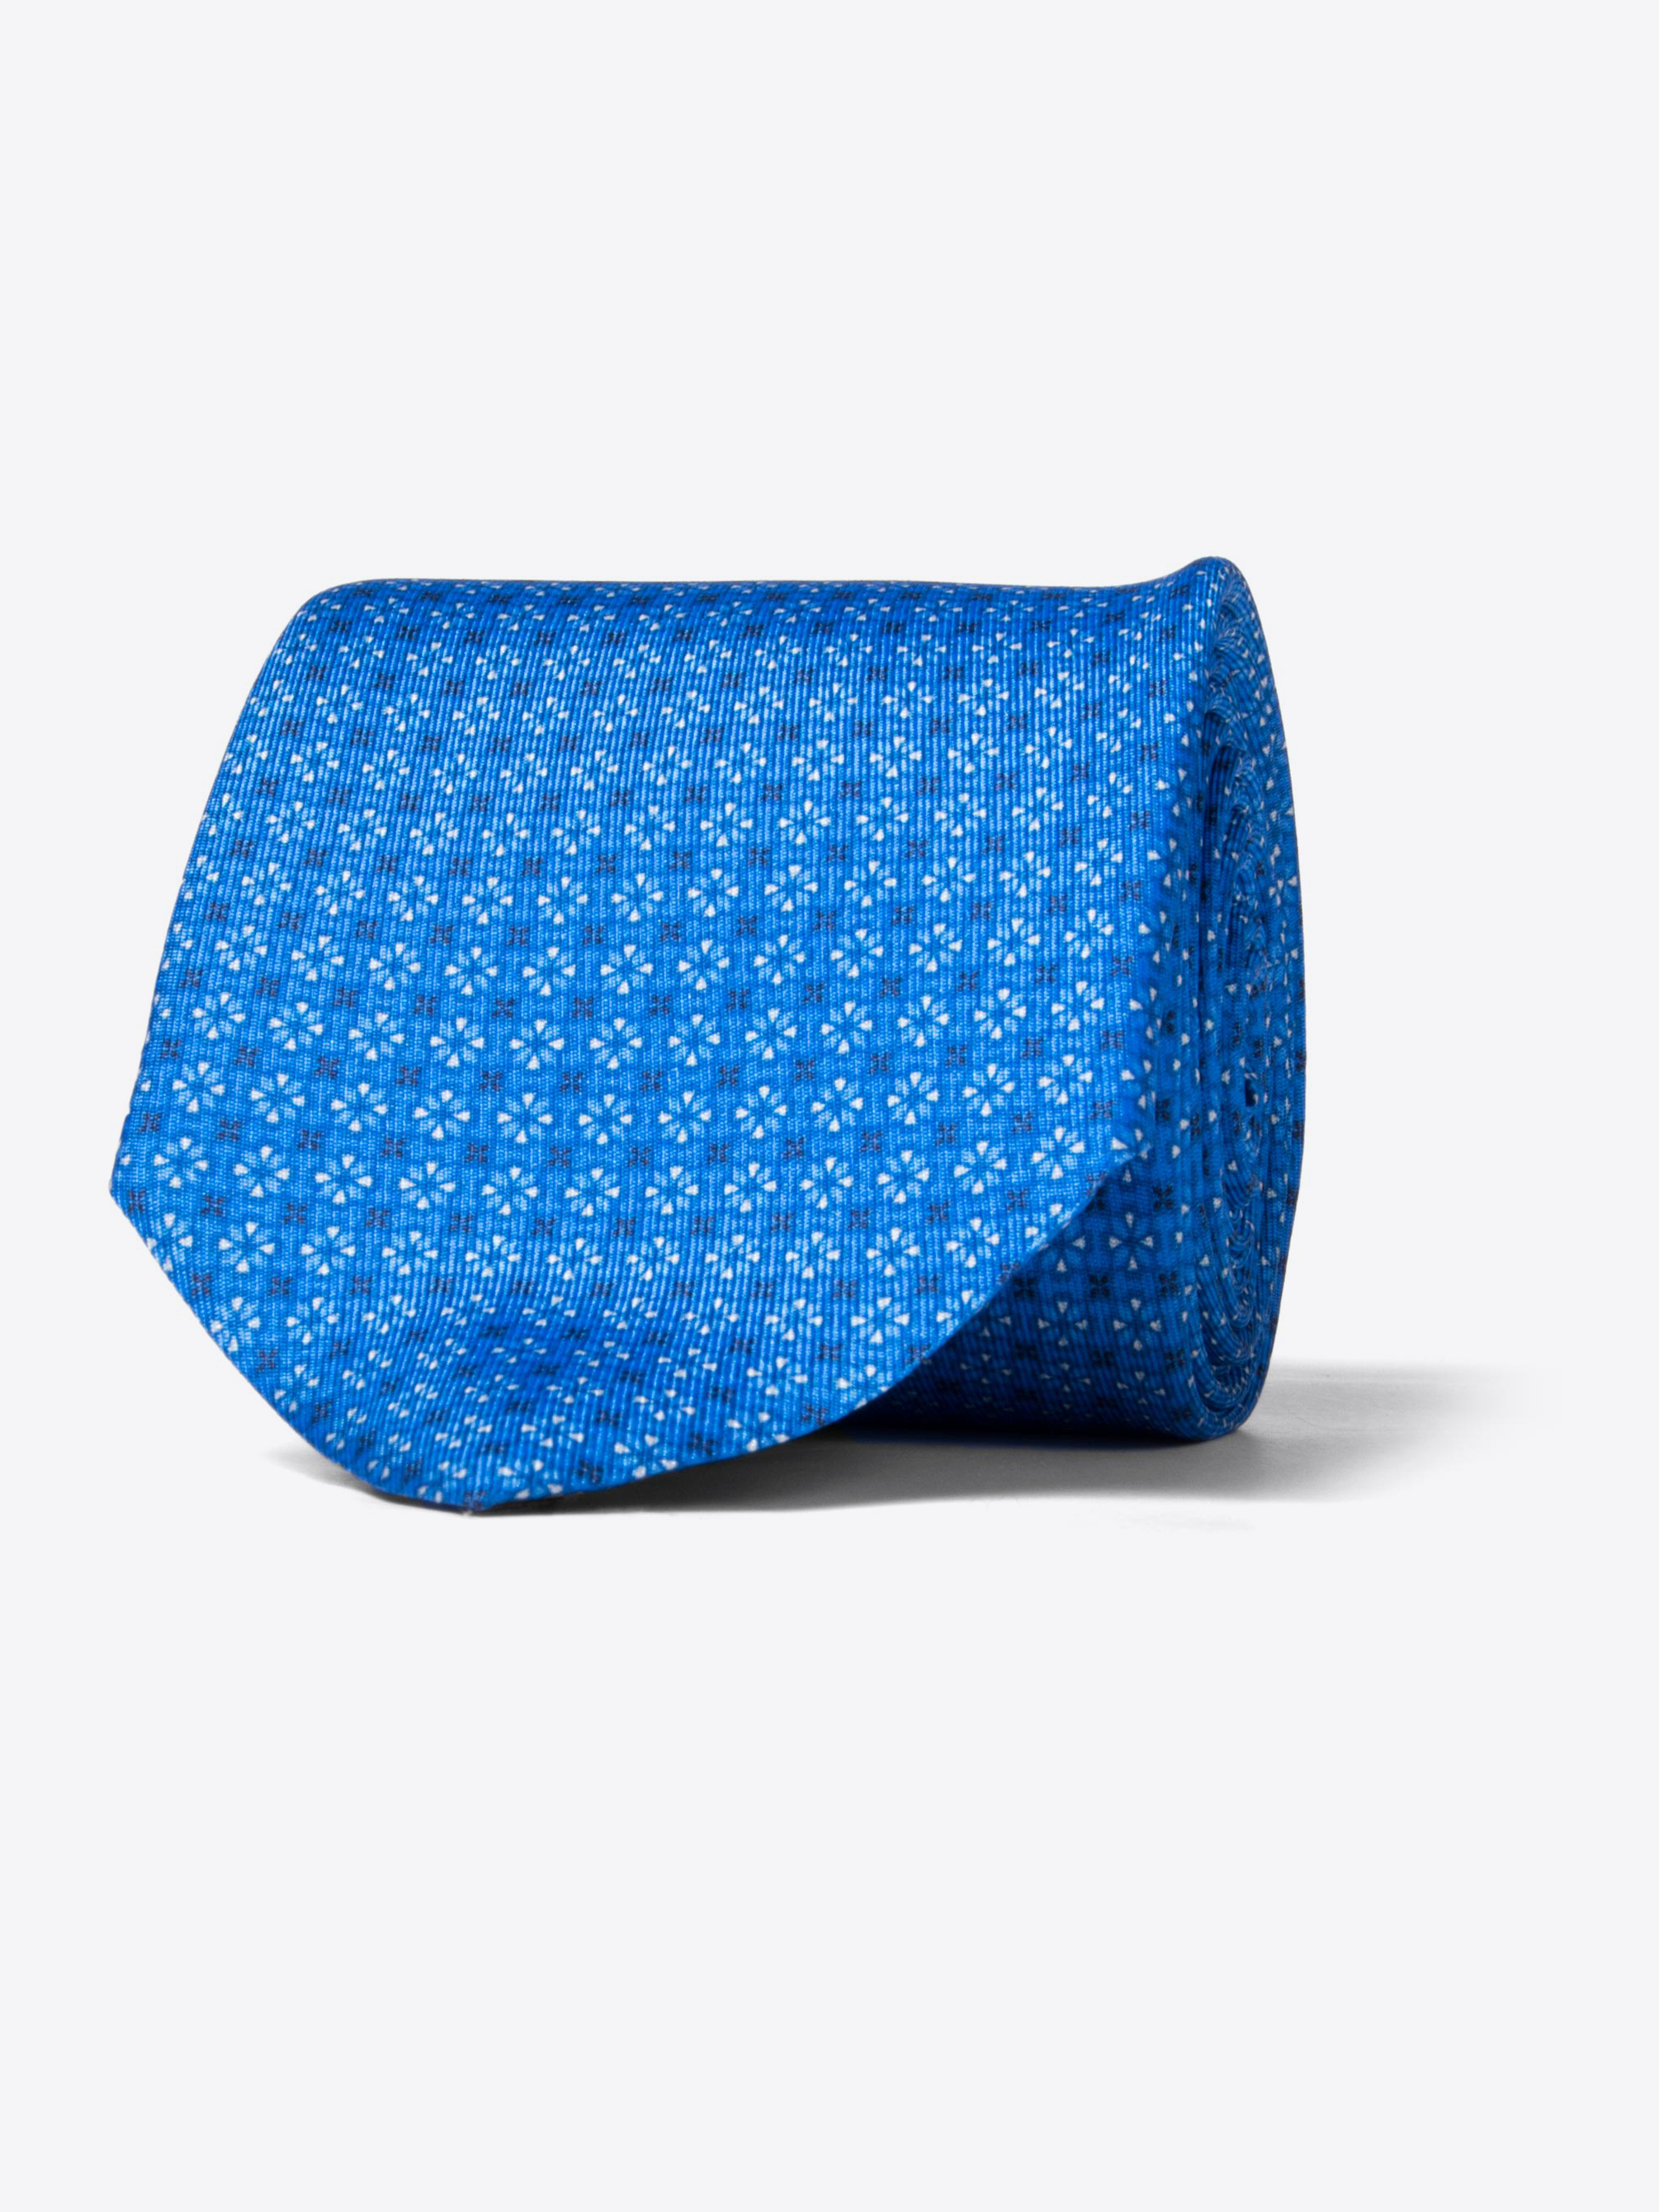 Zoom Image of Napoli Blue Print Tie